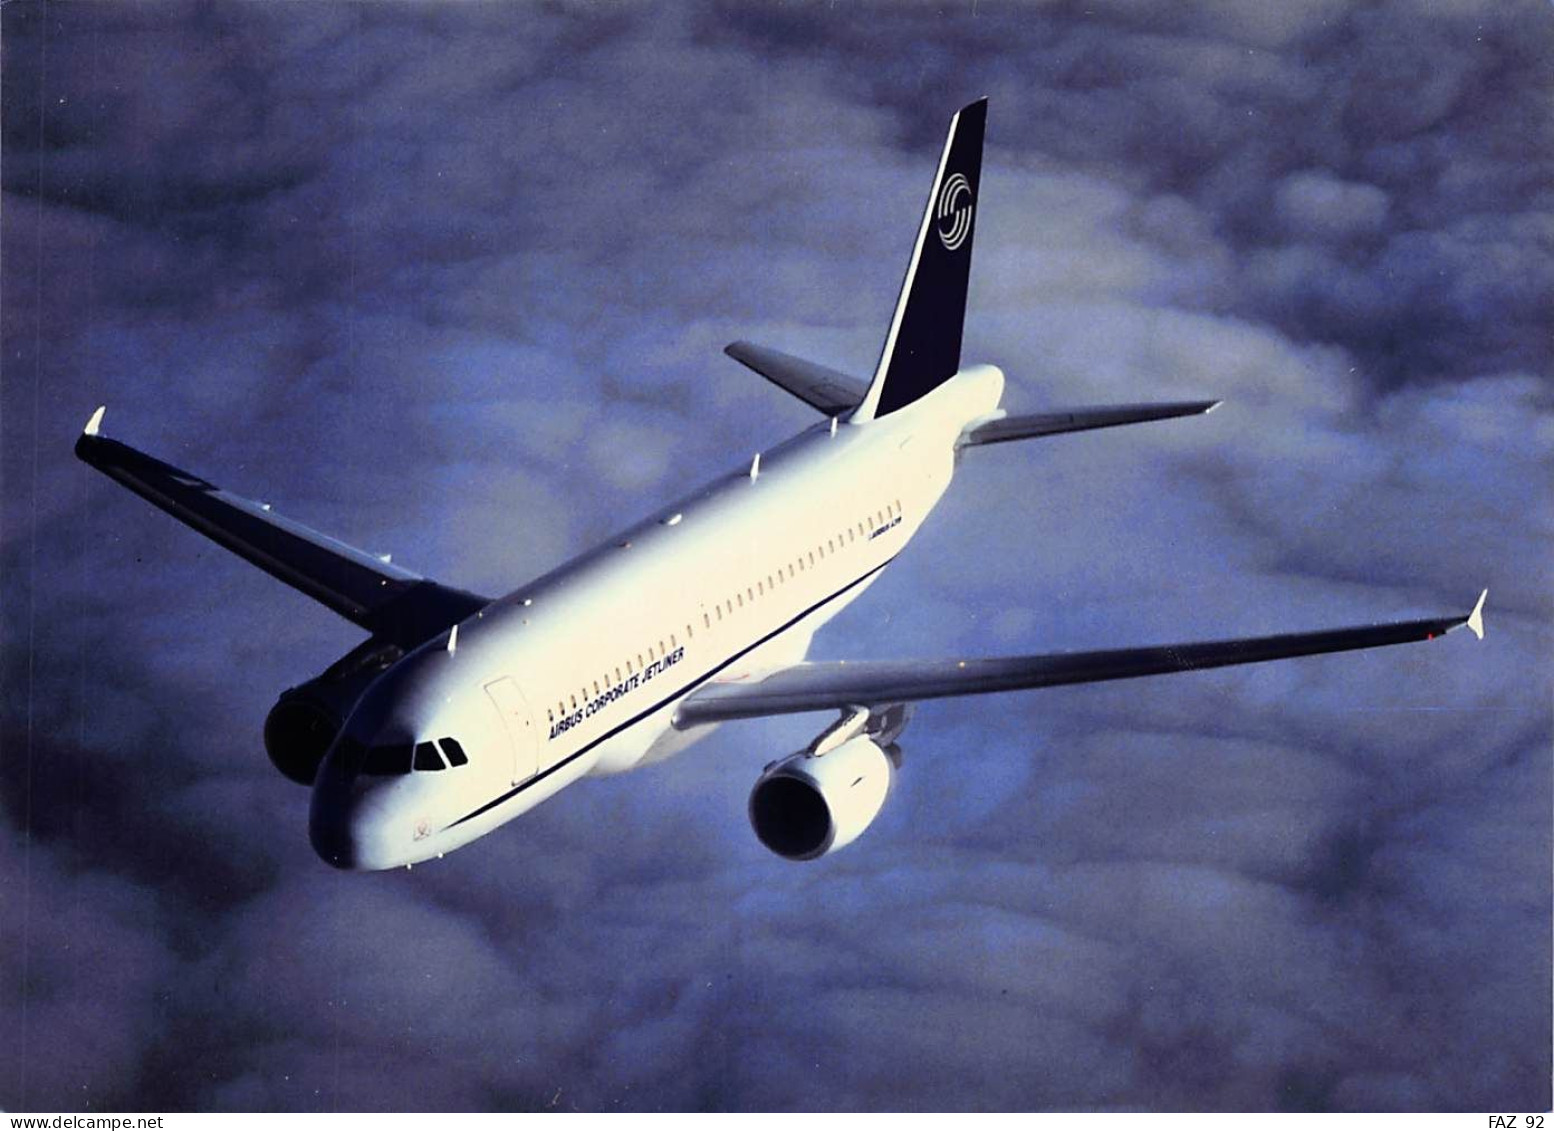 Airbus Corporation Jetliner - +/- 180 X 130 Mm. - Photo Presse Originale - Aviation